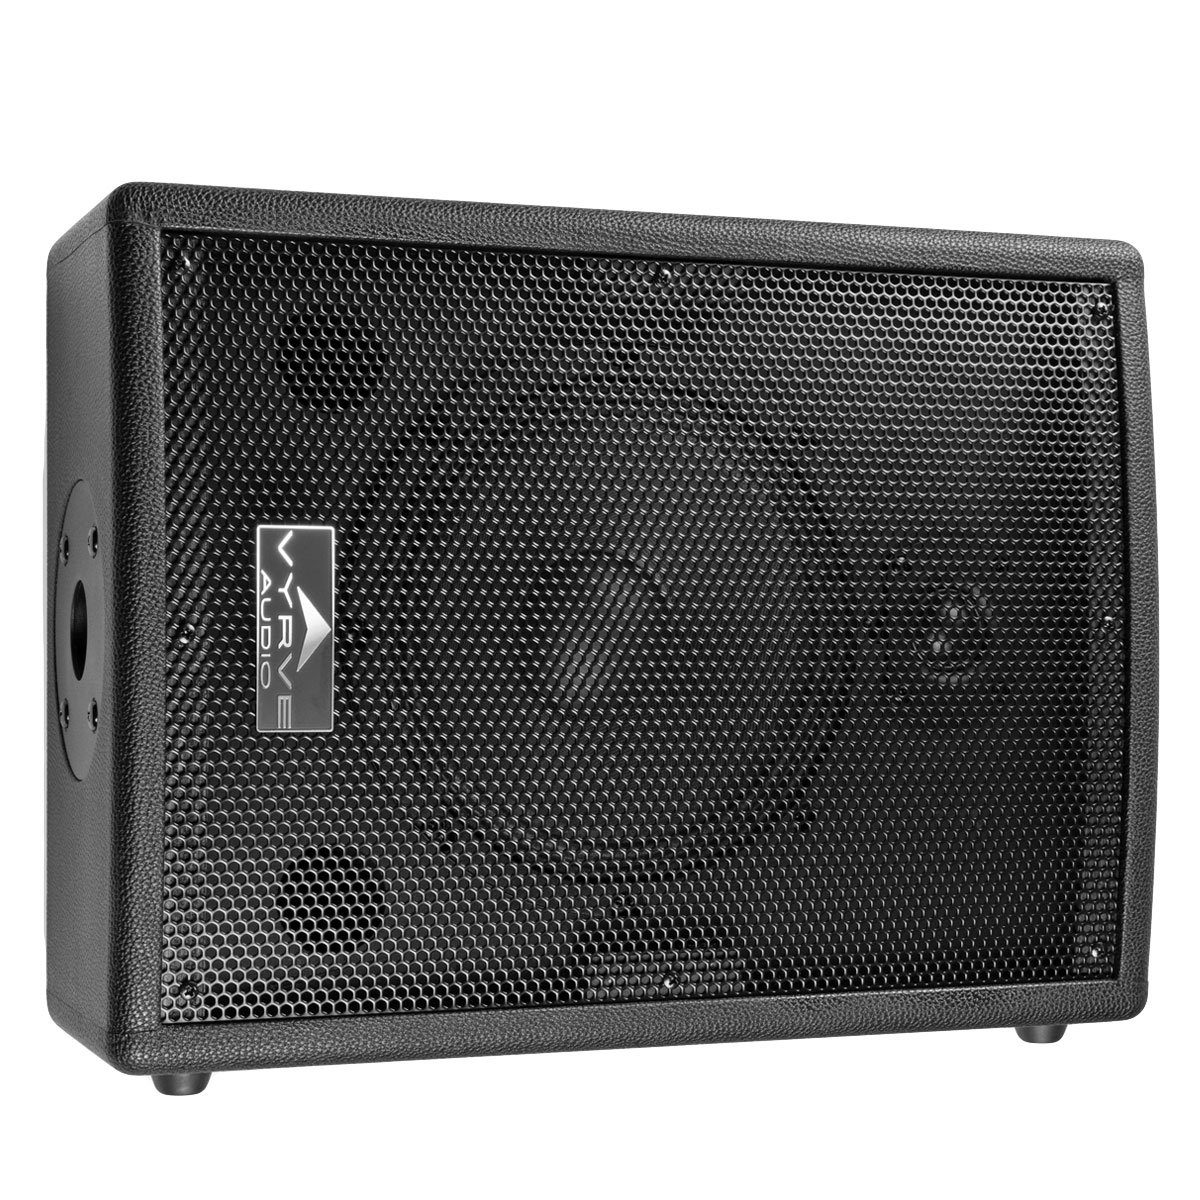 Vyrve (kein, ATRIA Lautsprecher 60 W) Aktivmonitor Audio